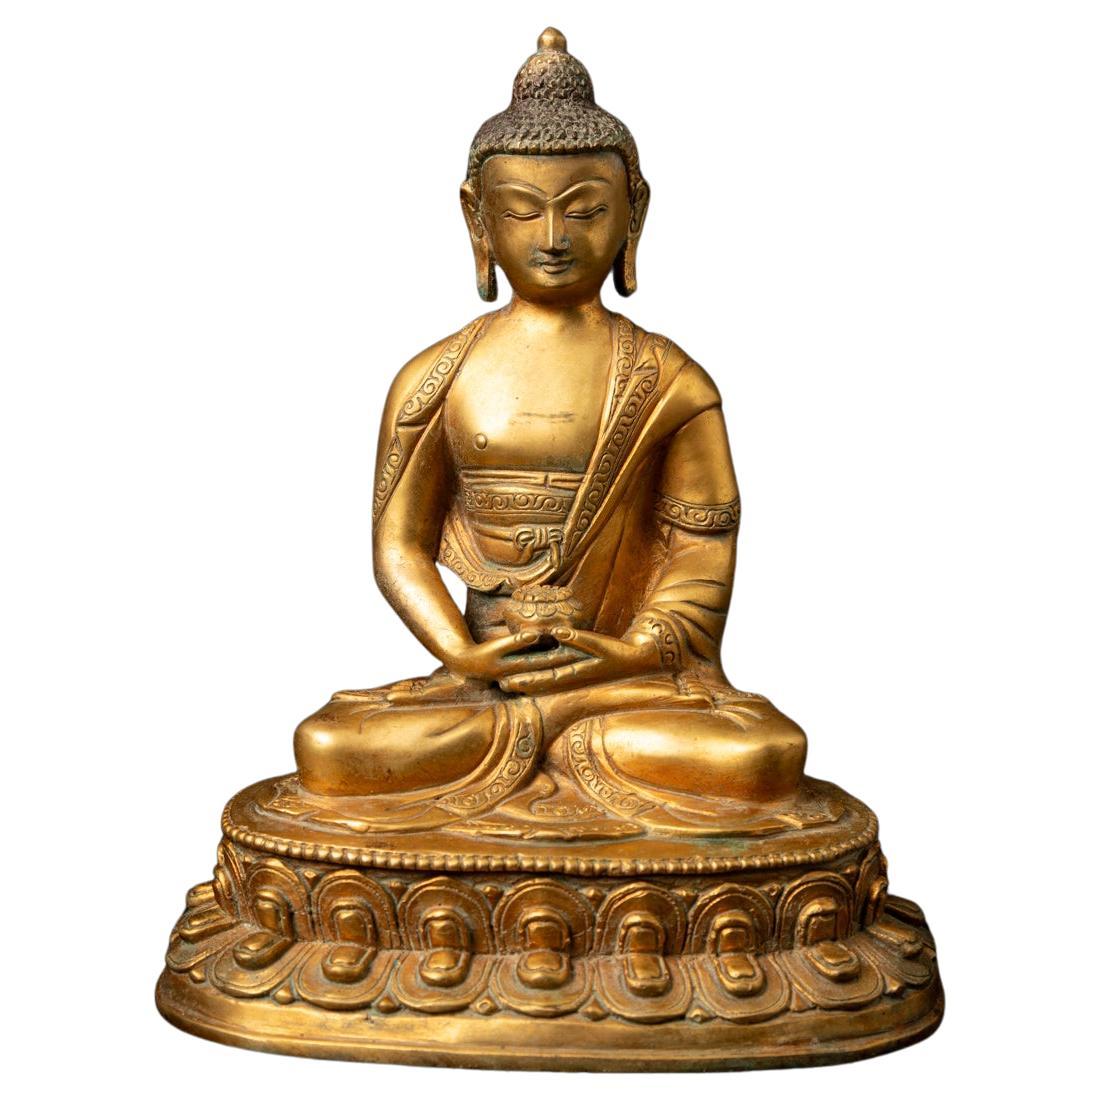 Middle 20th century Old bronze Nepali Buddha statue - OriginalBuddhas